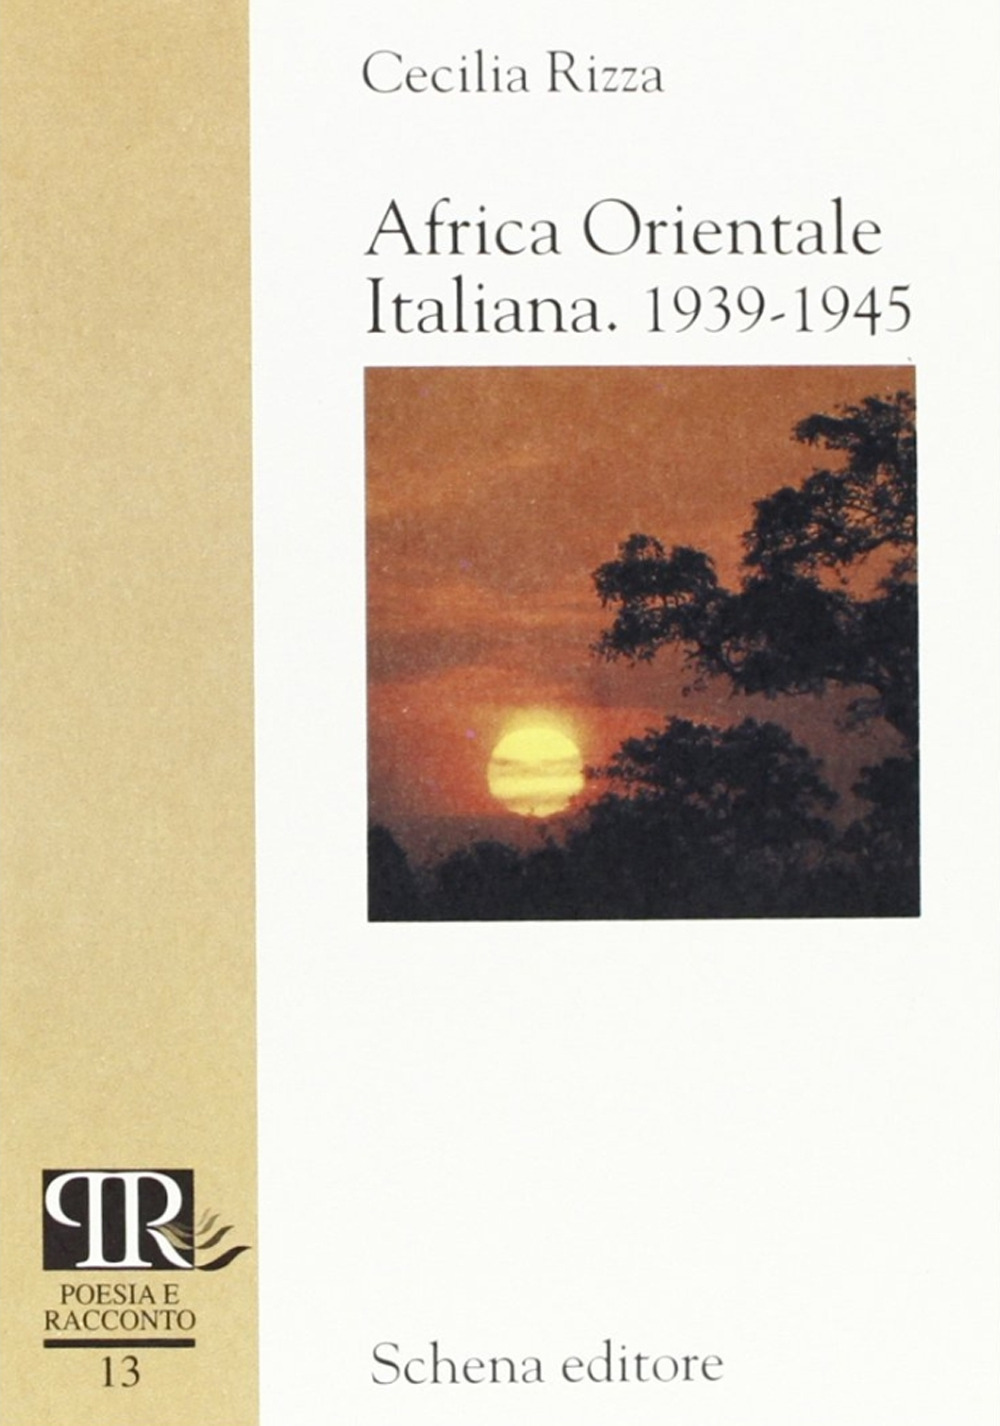 Africa orientale italiana 1939-1945